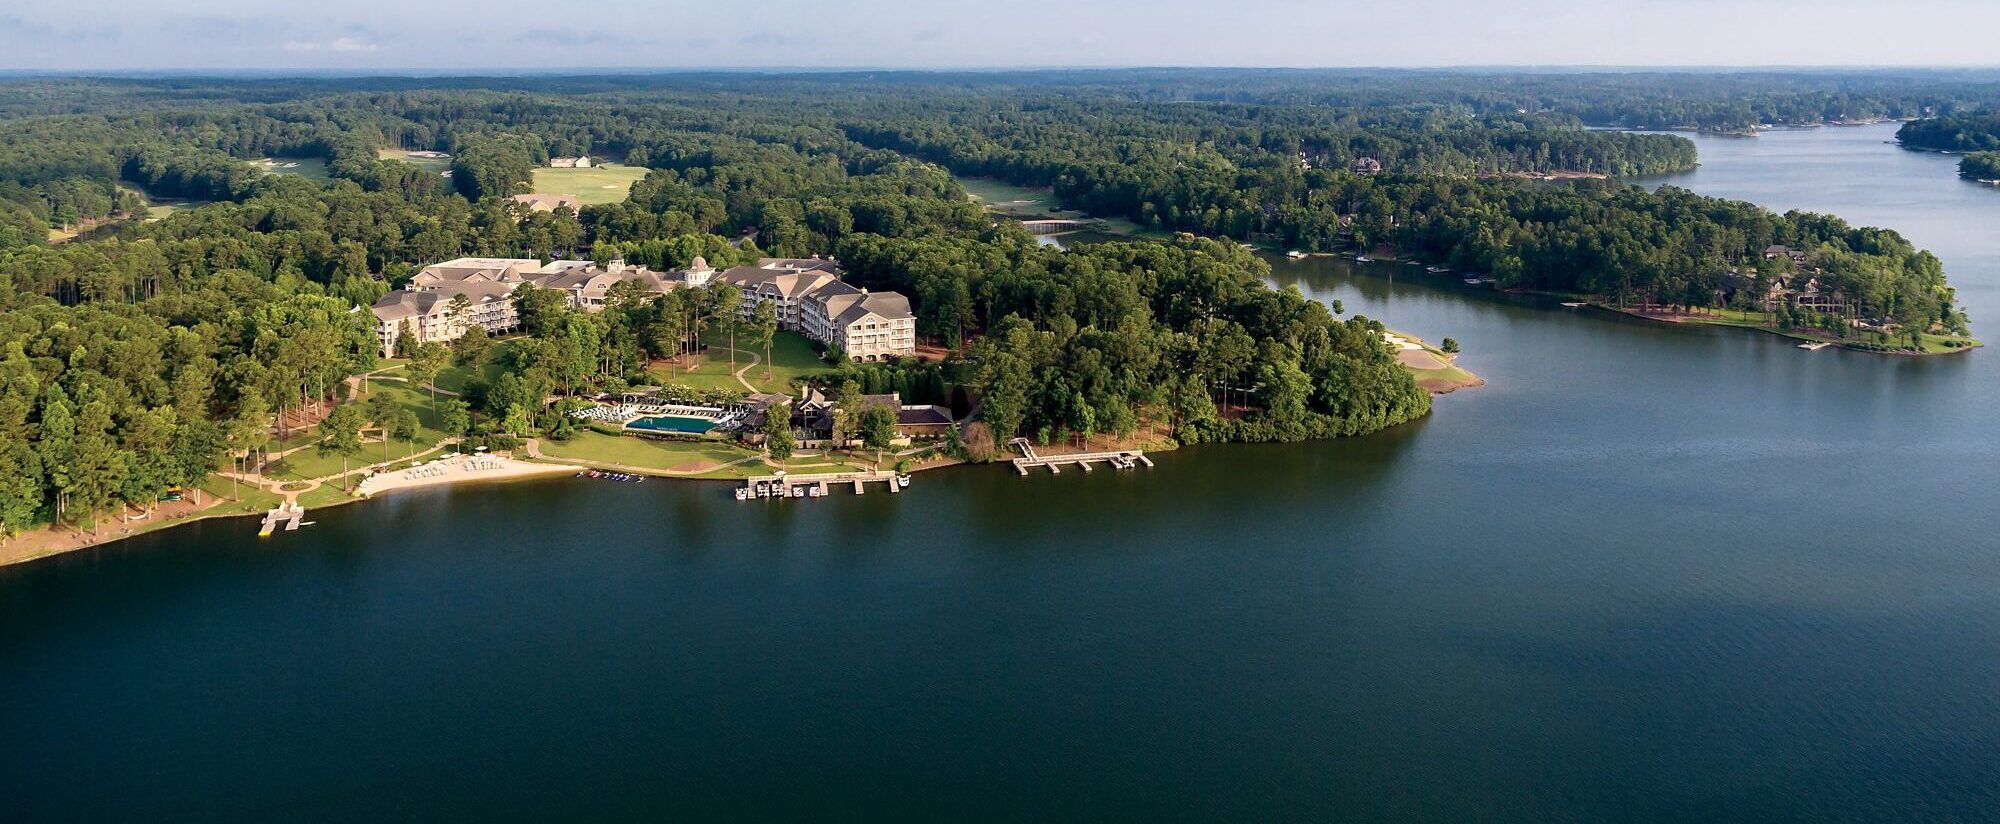 Ritz Carlton Reynolds Lake Oconee Golf Resort